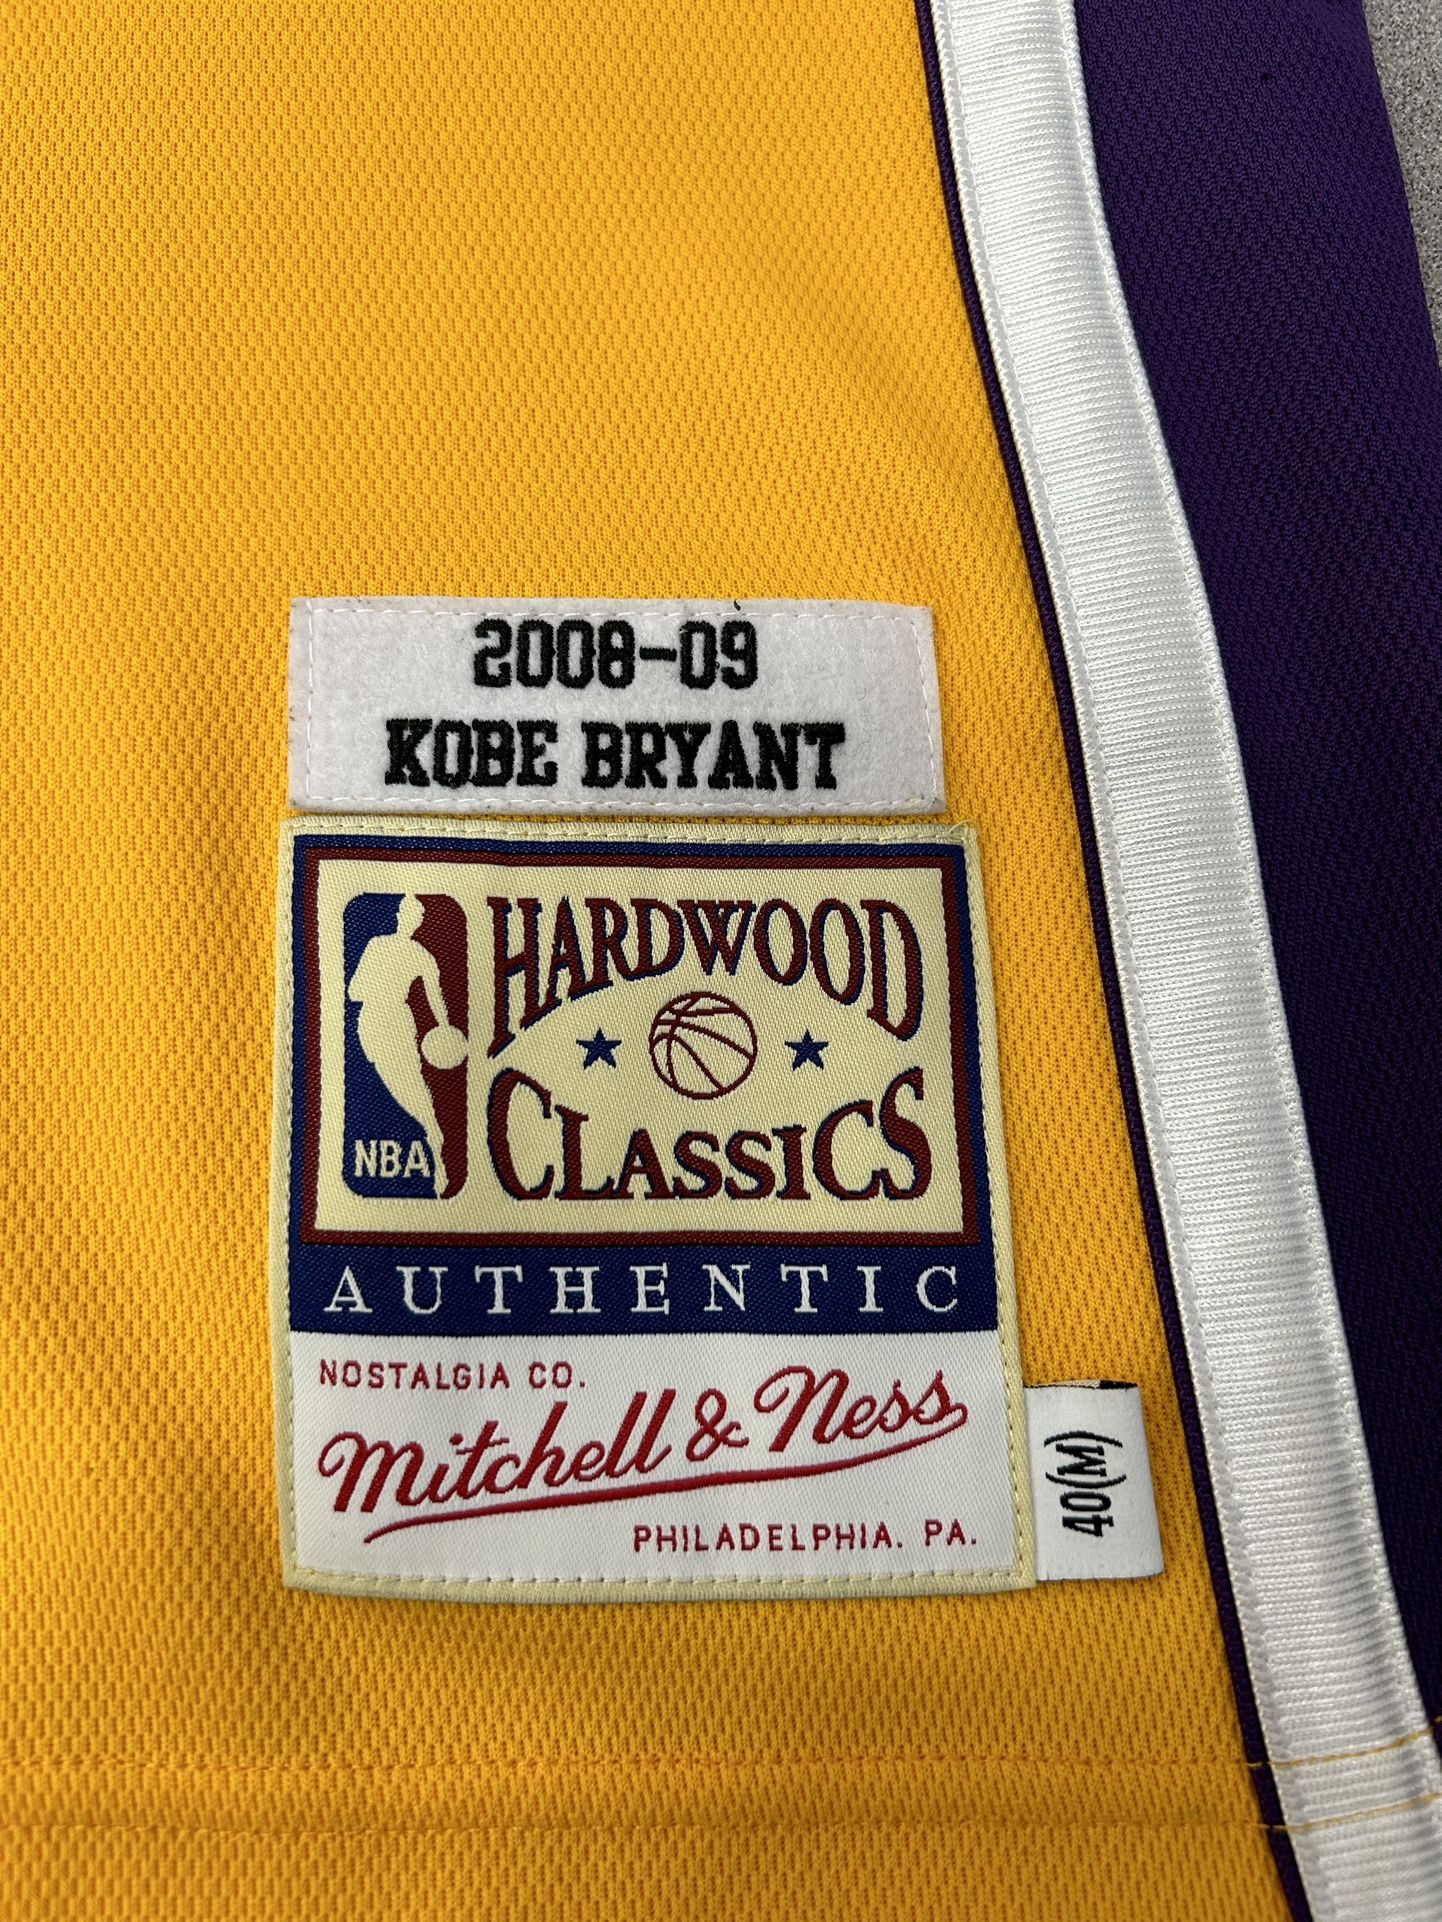 Authentic Kobe Bryant Jersey 